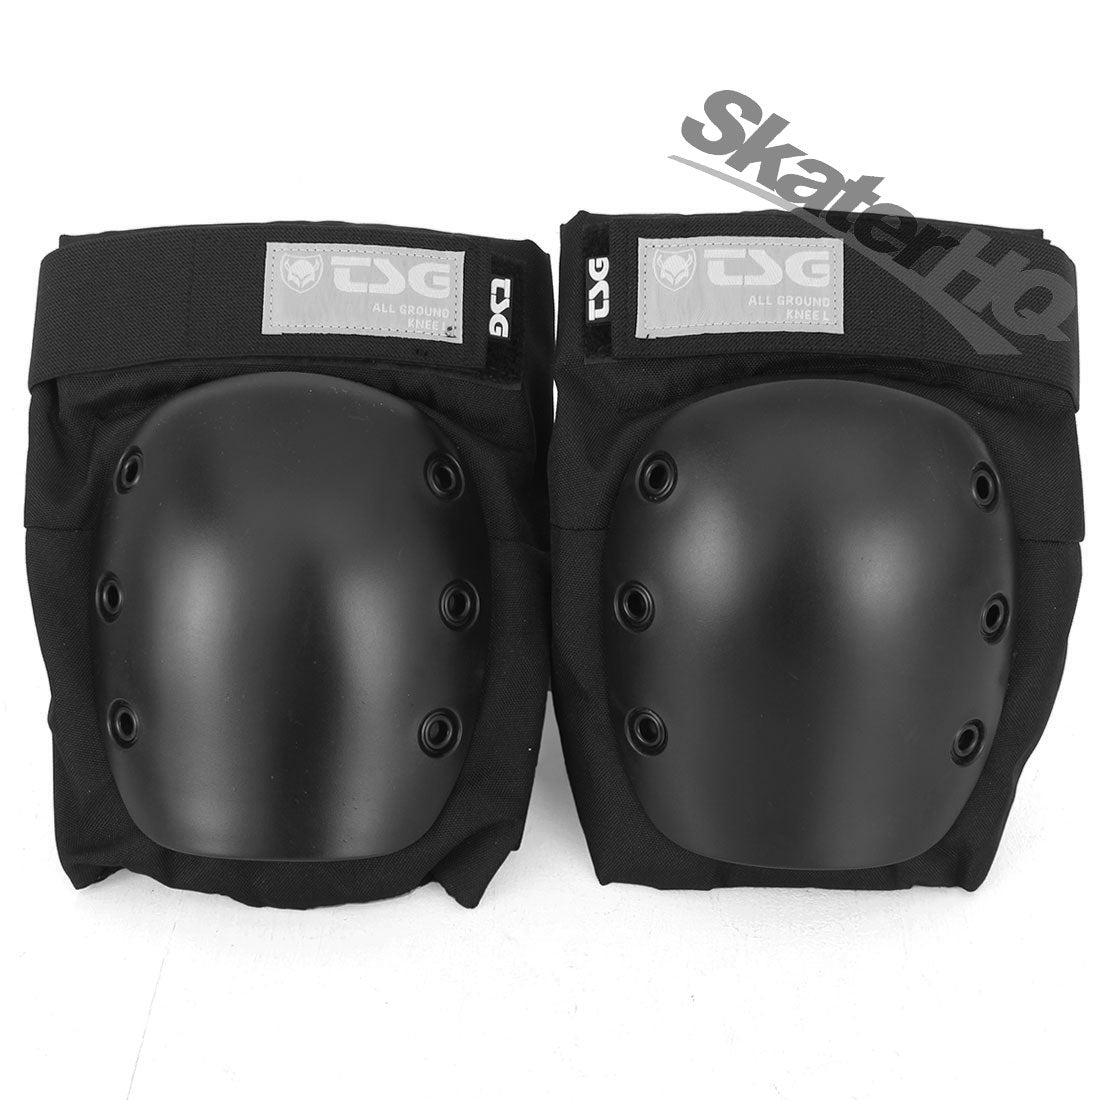 TSG All Ground Kneepads - XLarge Protective Gear